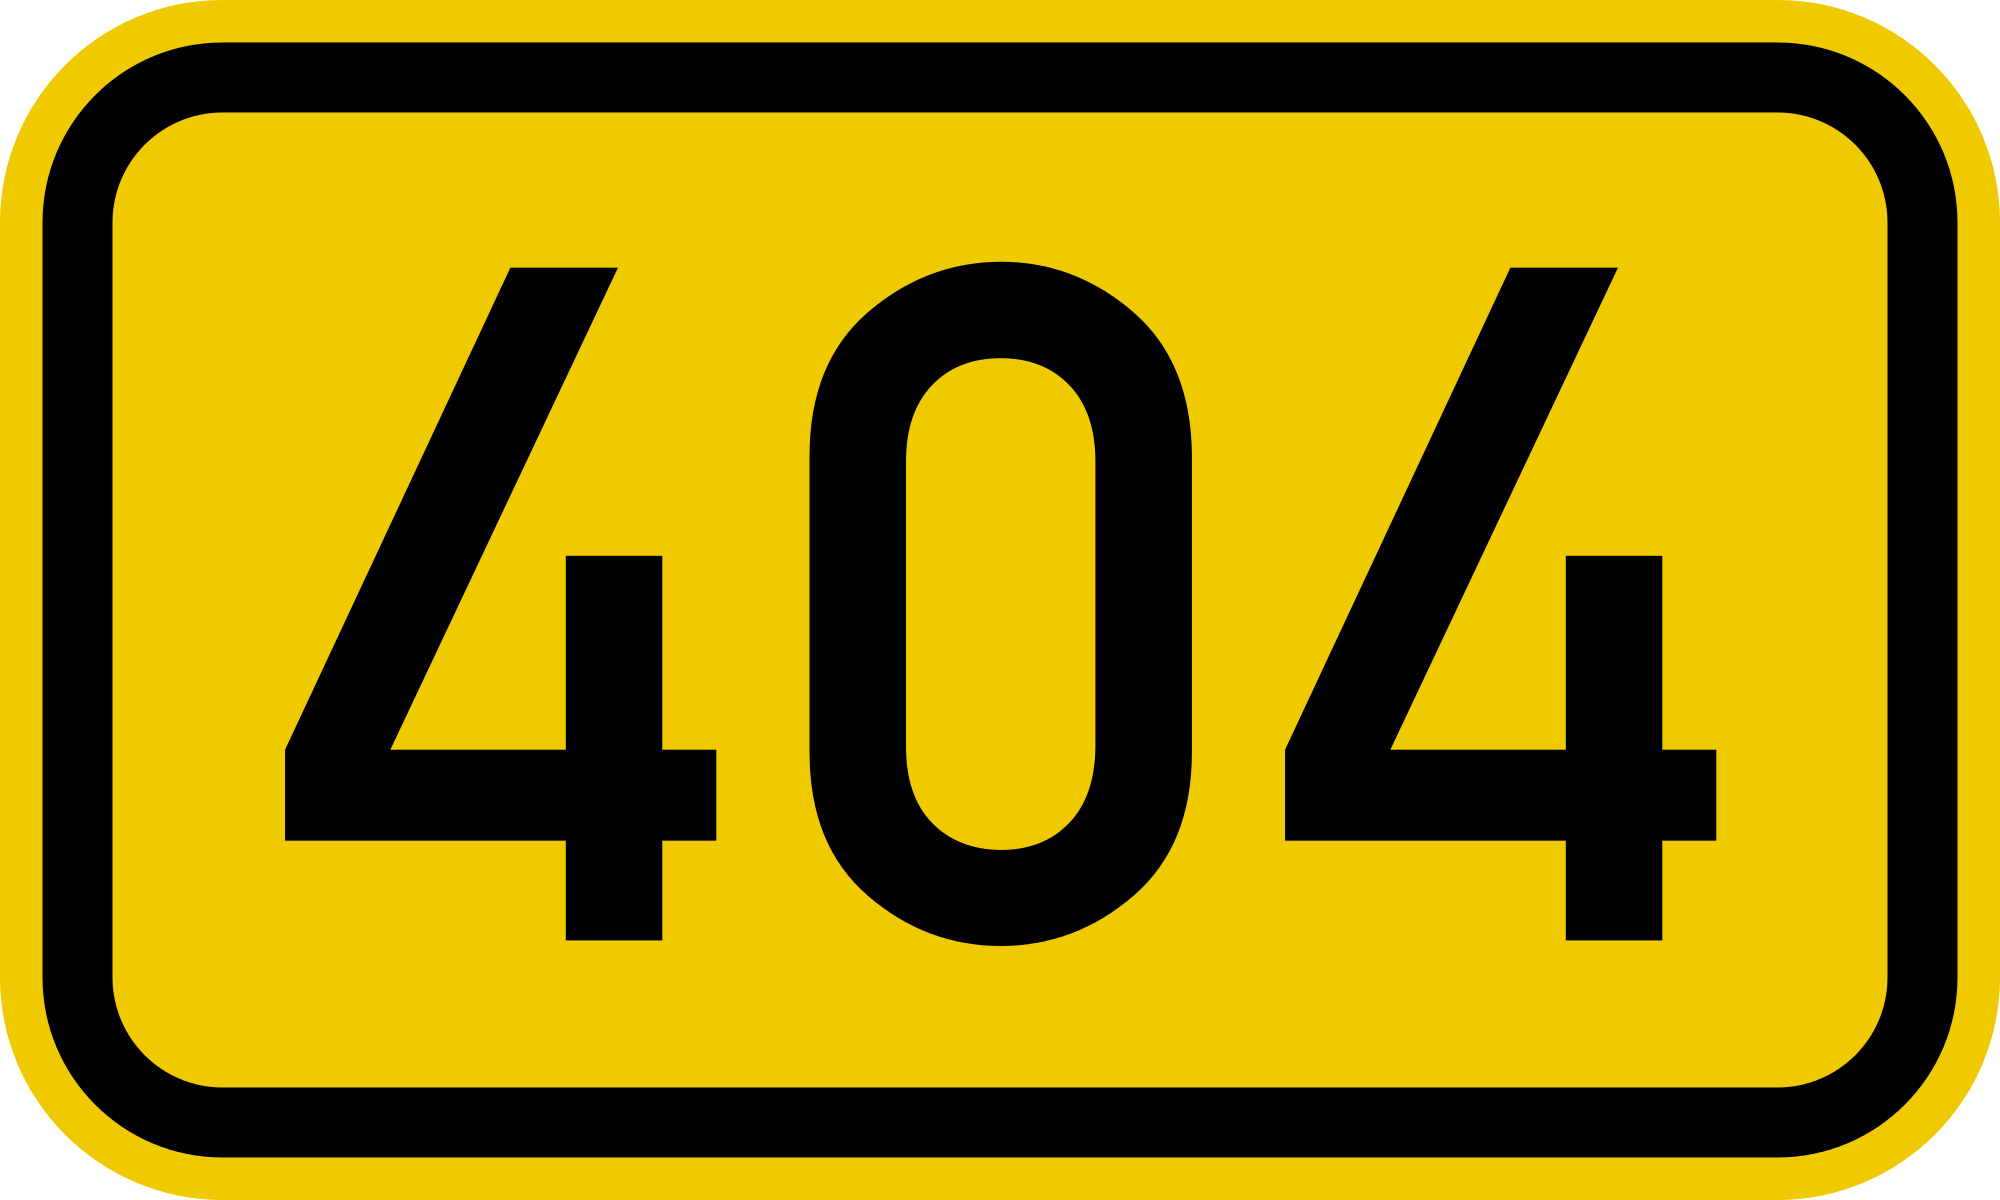  404 number